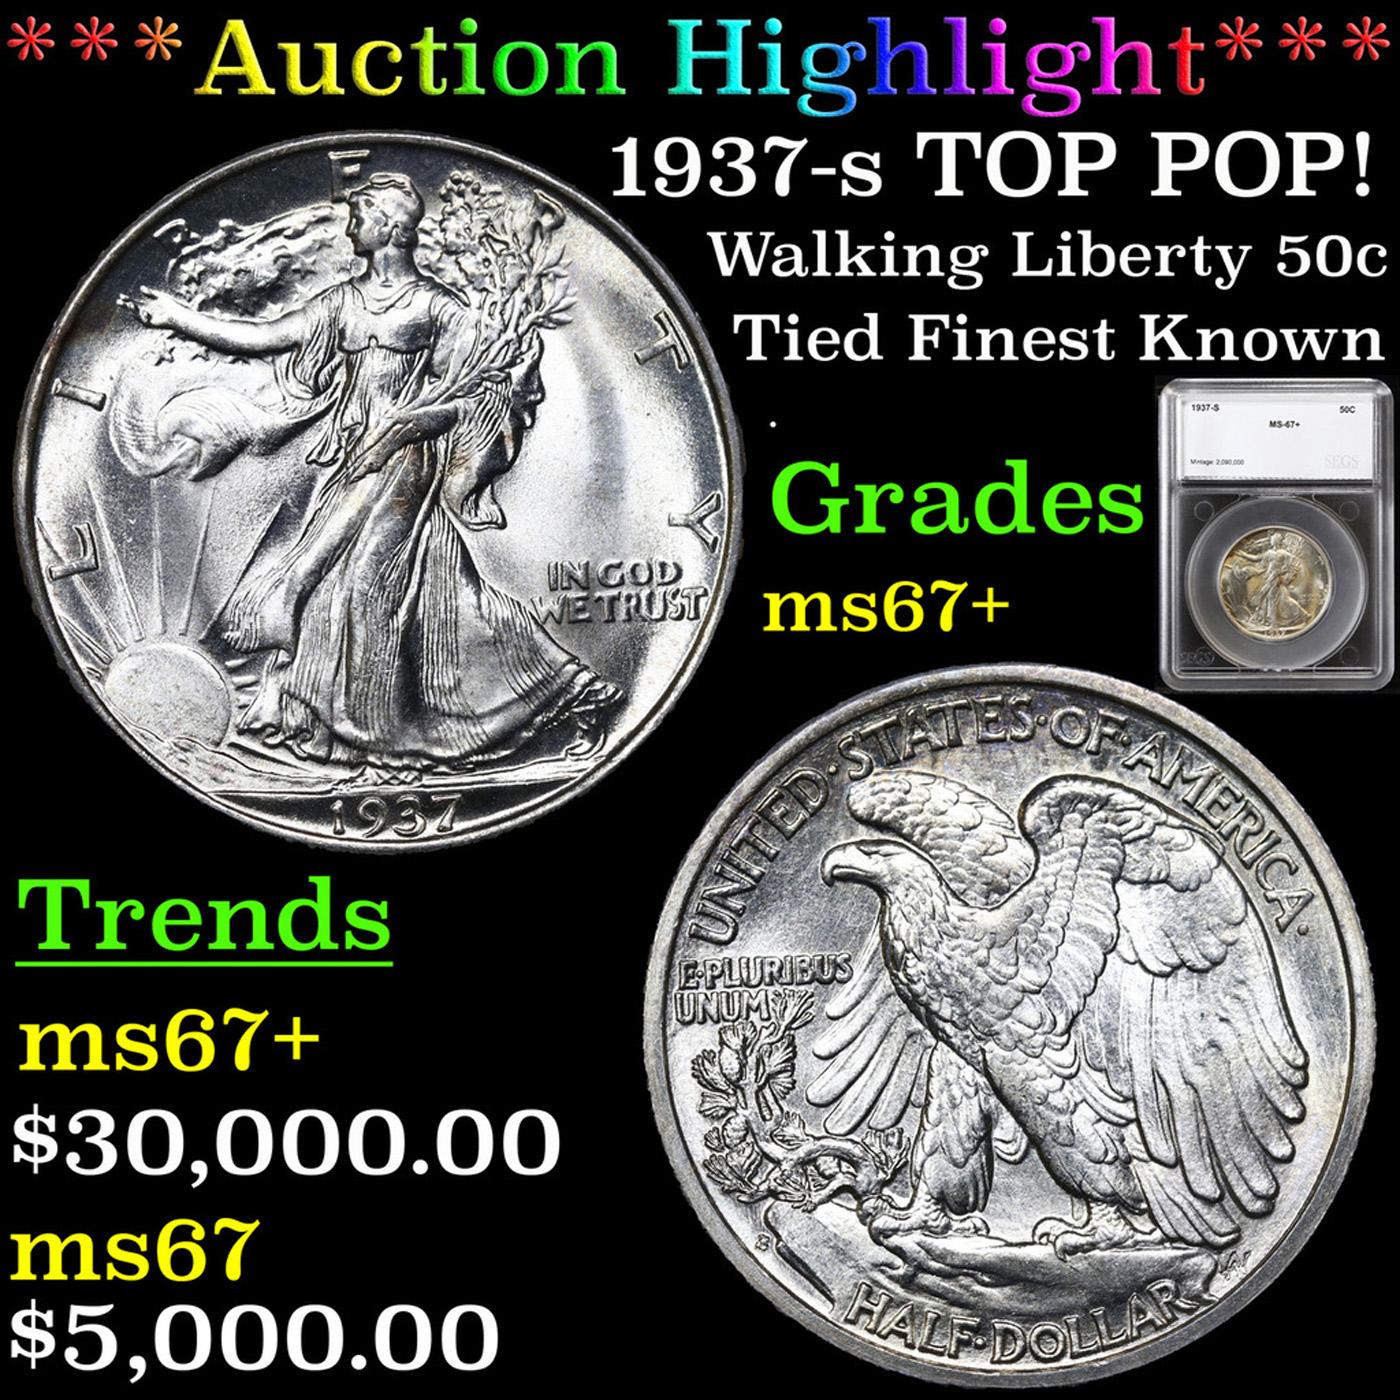 ***Auction Highlight*** 1937-s Walking Liberty Half Dollar TOP POP! 50c Graded ms67+ By SEGS (fc)